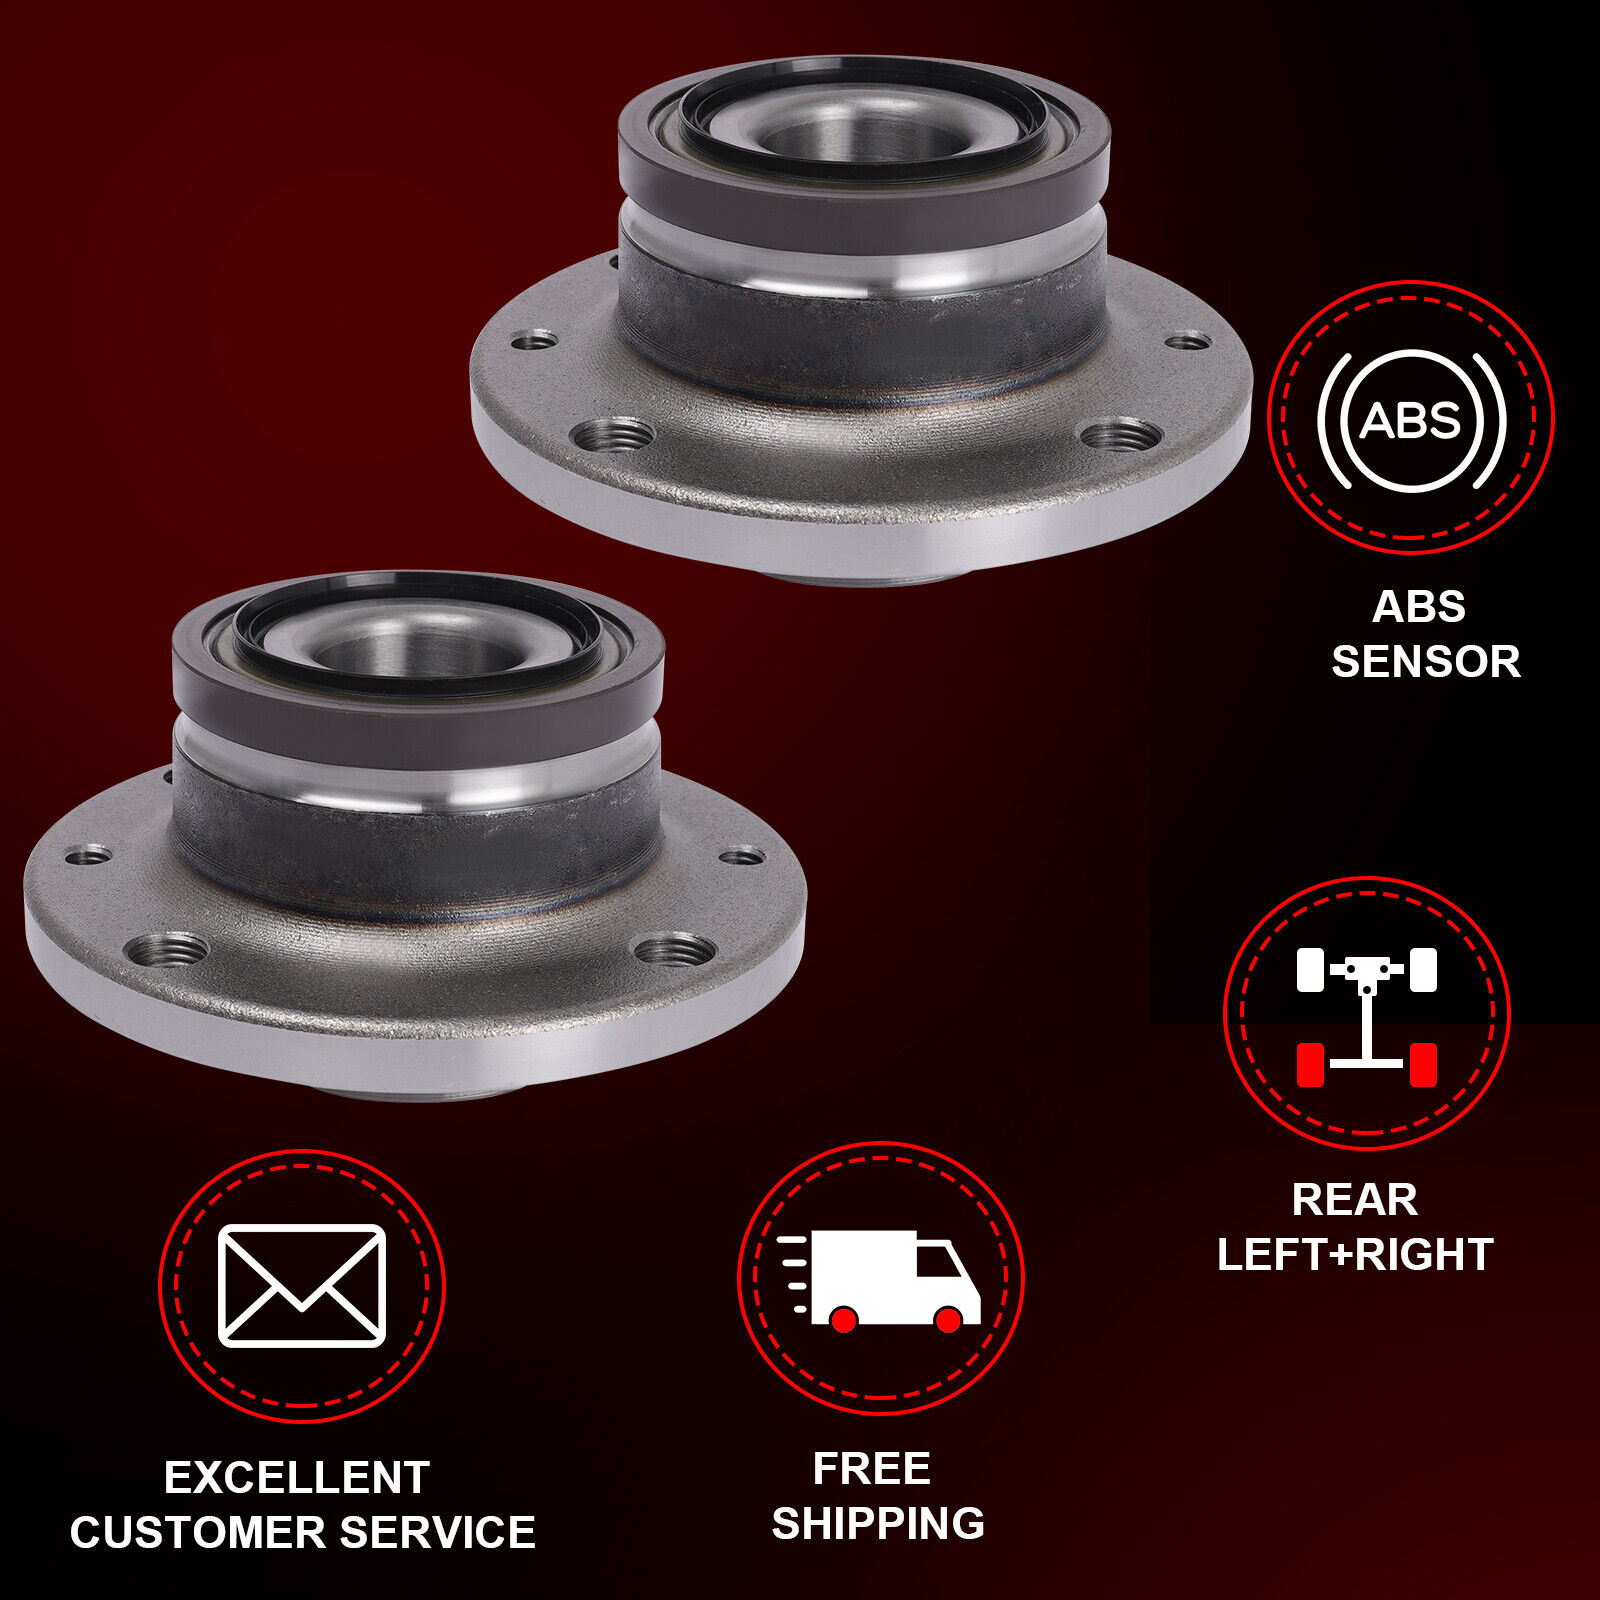 2x Rear Wheel Bearings Hub Assembly For Fiat 500 1.4L 2012 2013 2014-2019 W/ABS